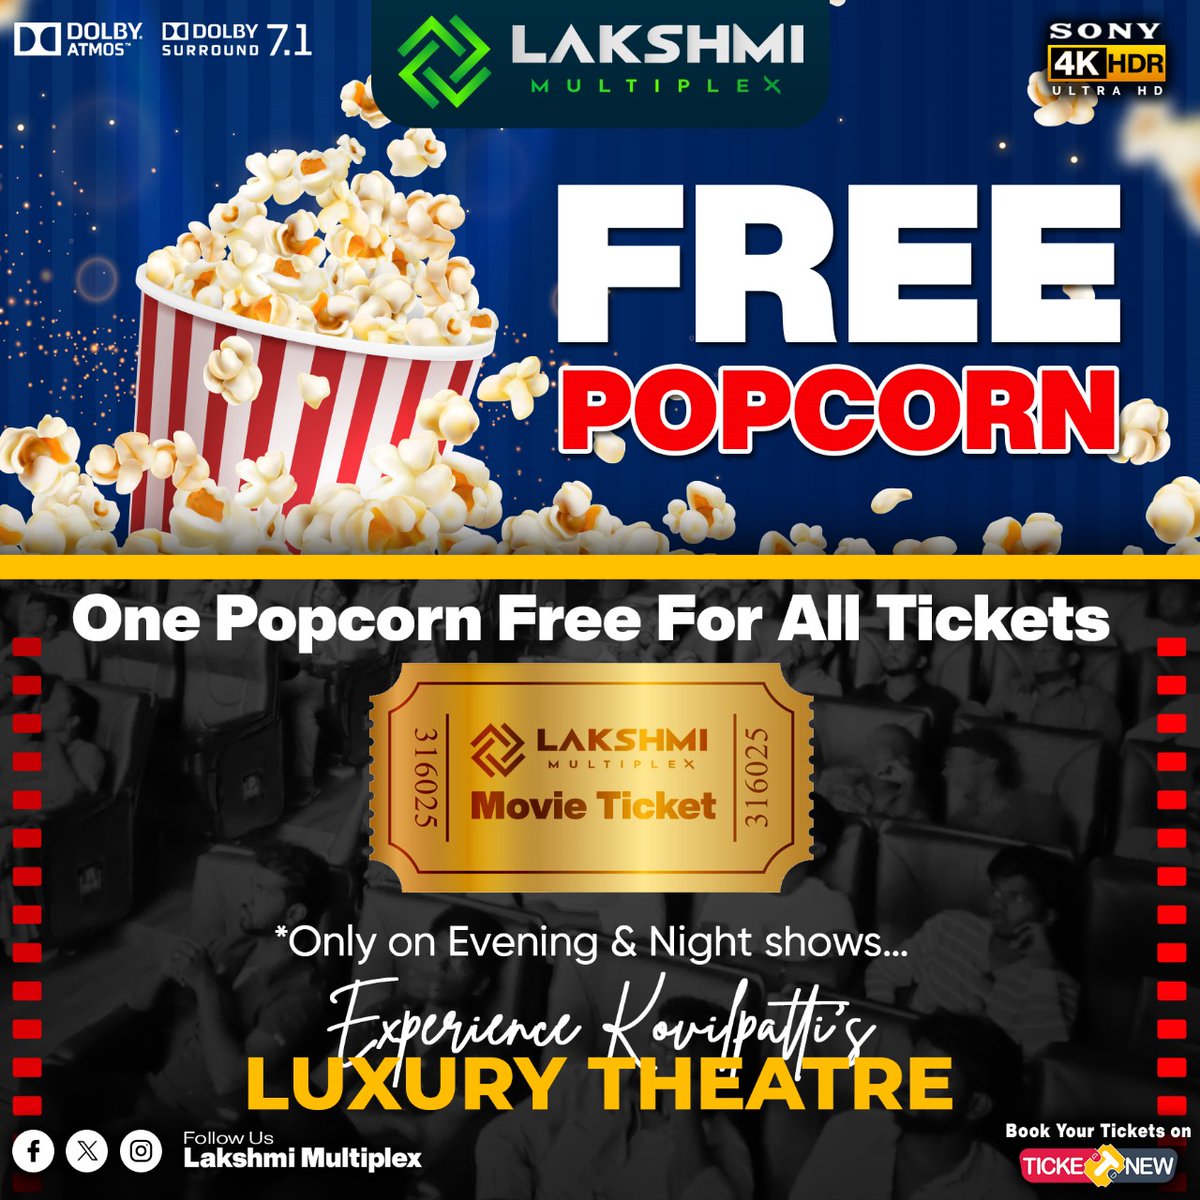 One Popcorn Free for All Tickets 🤩✨🍿 @lakshmimulti #lakshmicinemas #kovilpatti